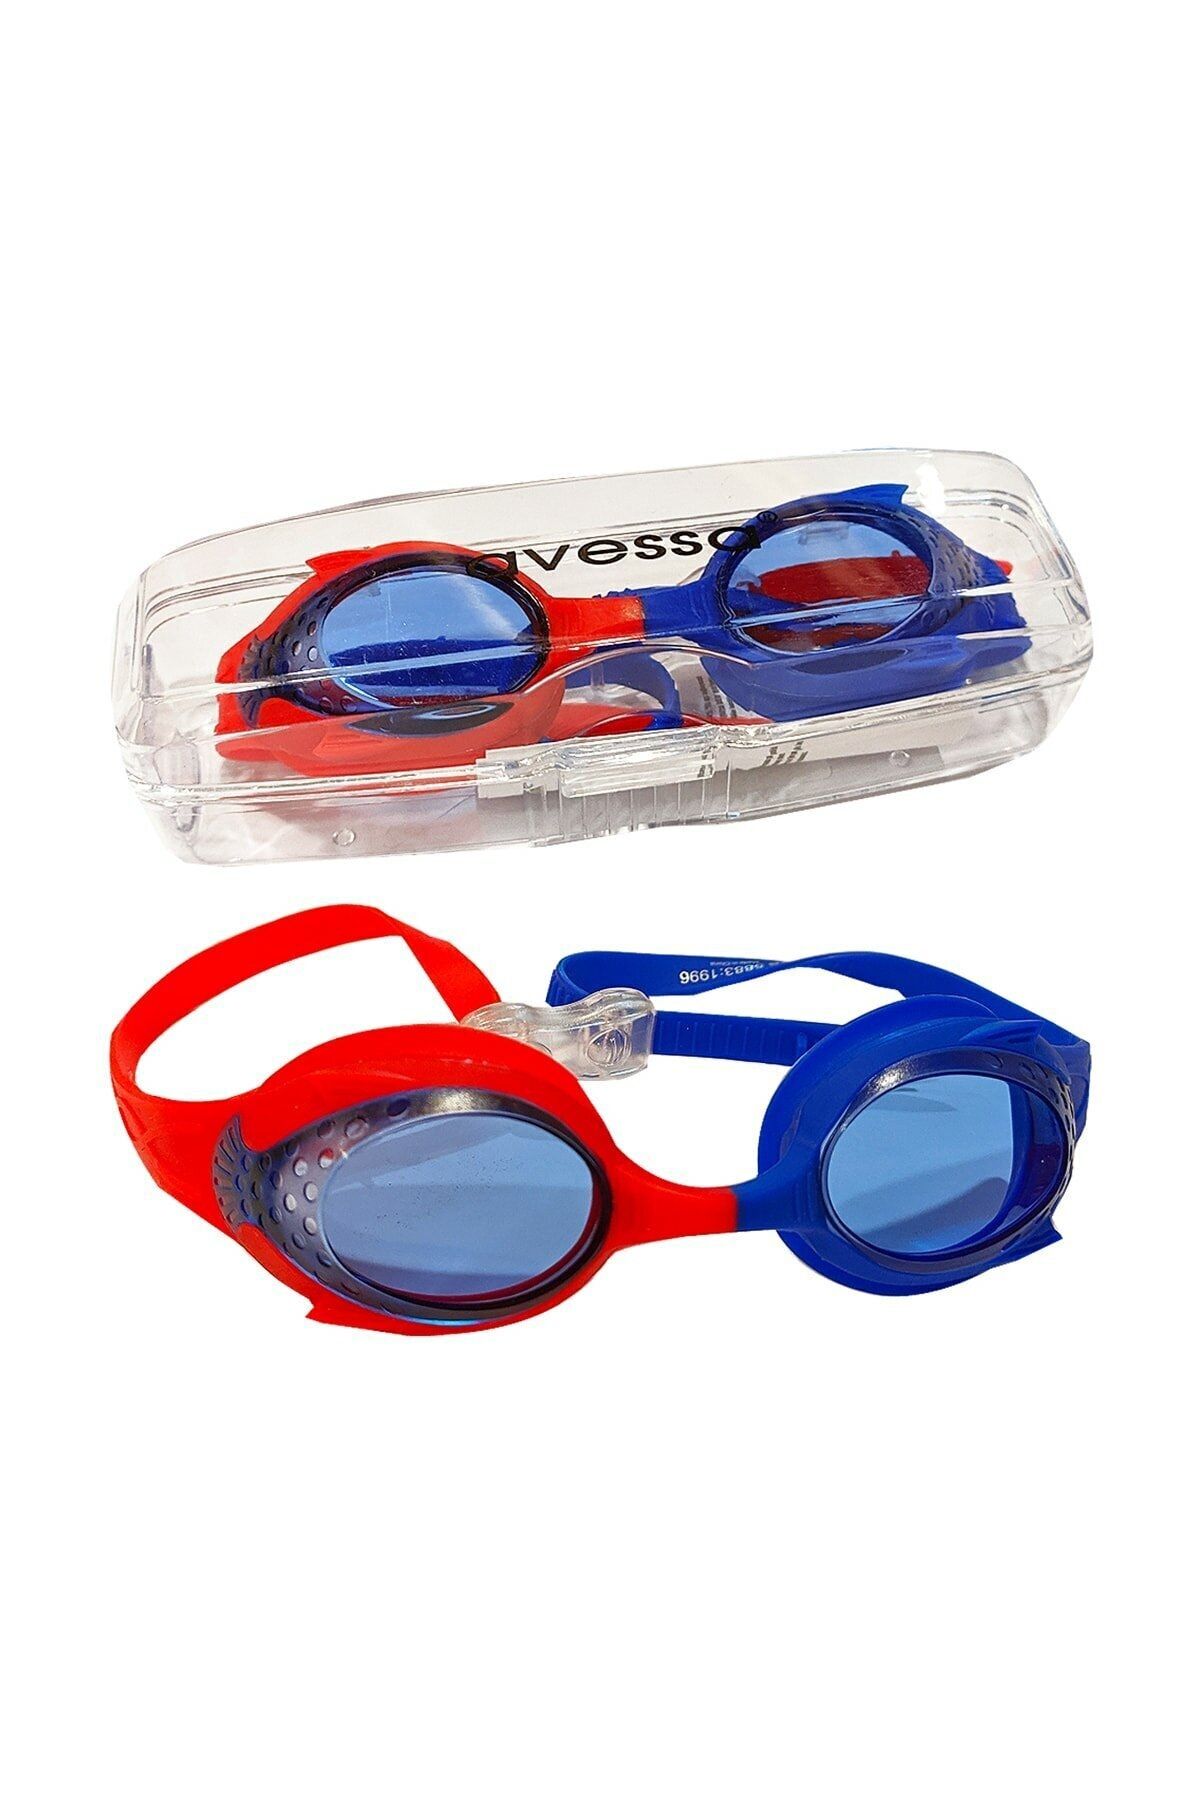 Avessa Mavi Kırmızı Çocuk Yüzücü Gözlüğü - Deniz Gözlüğü - Havuz Gözlüğü - Gözlük